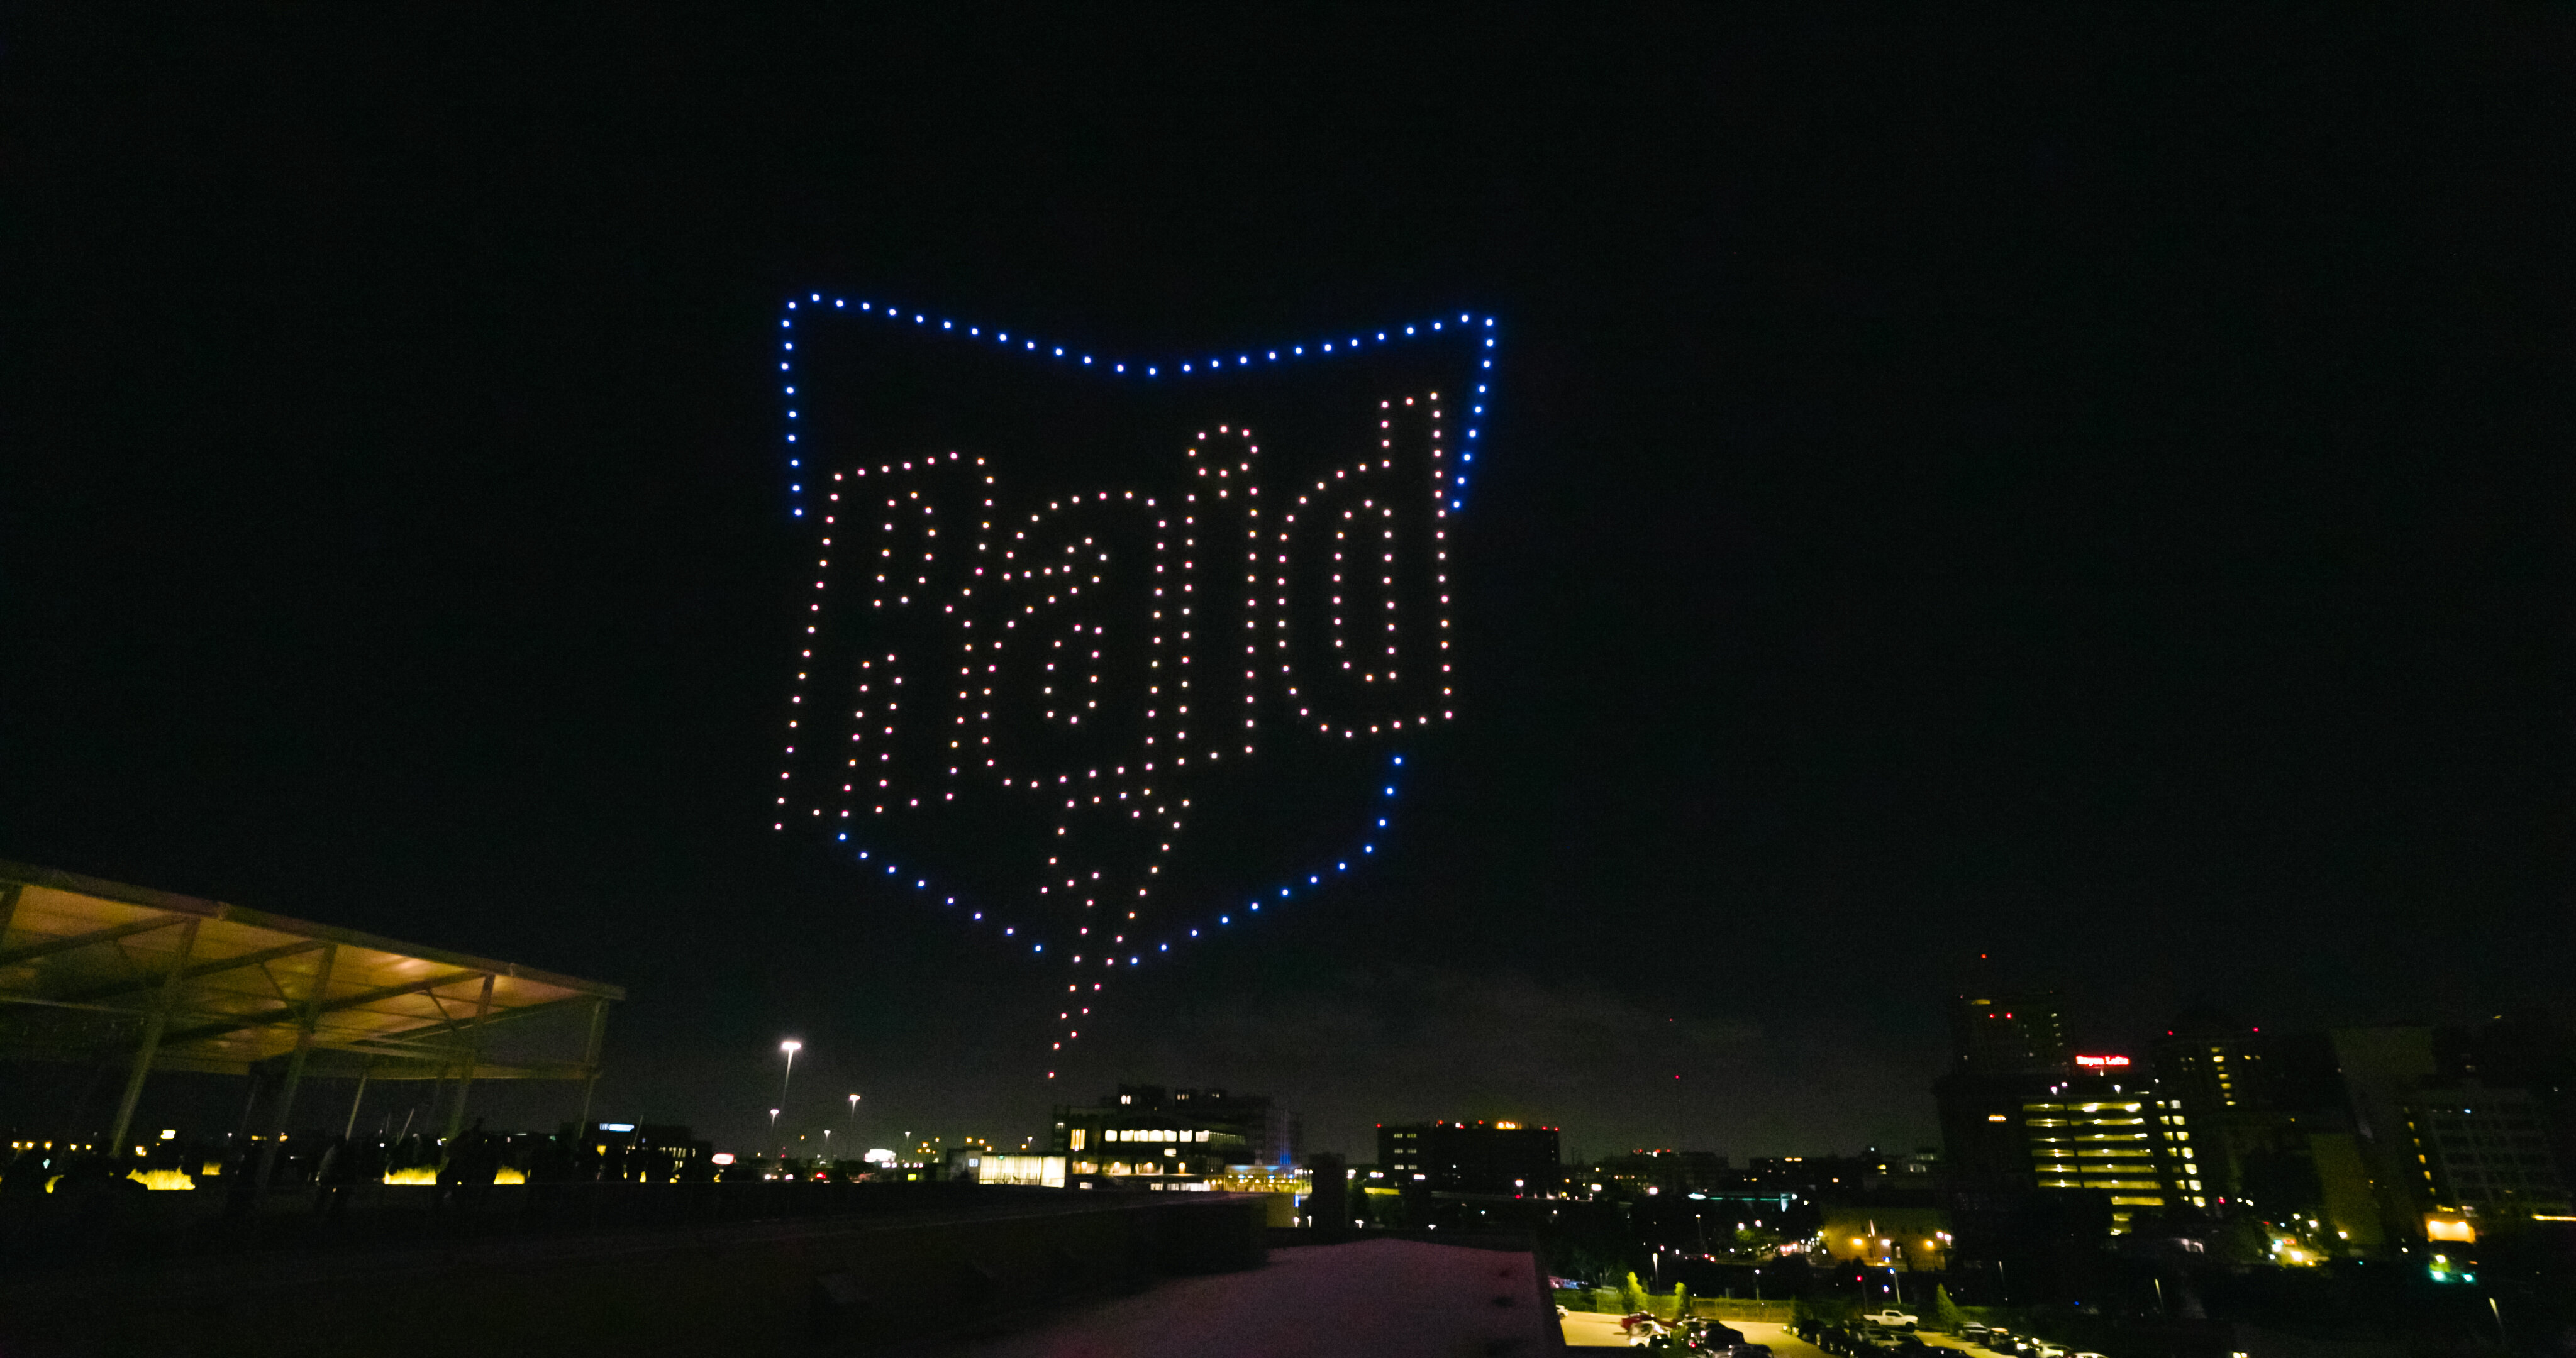 SC Johnson Raid logo in the sky during drone light show